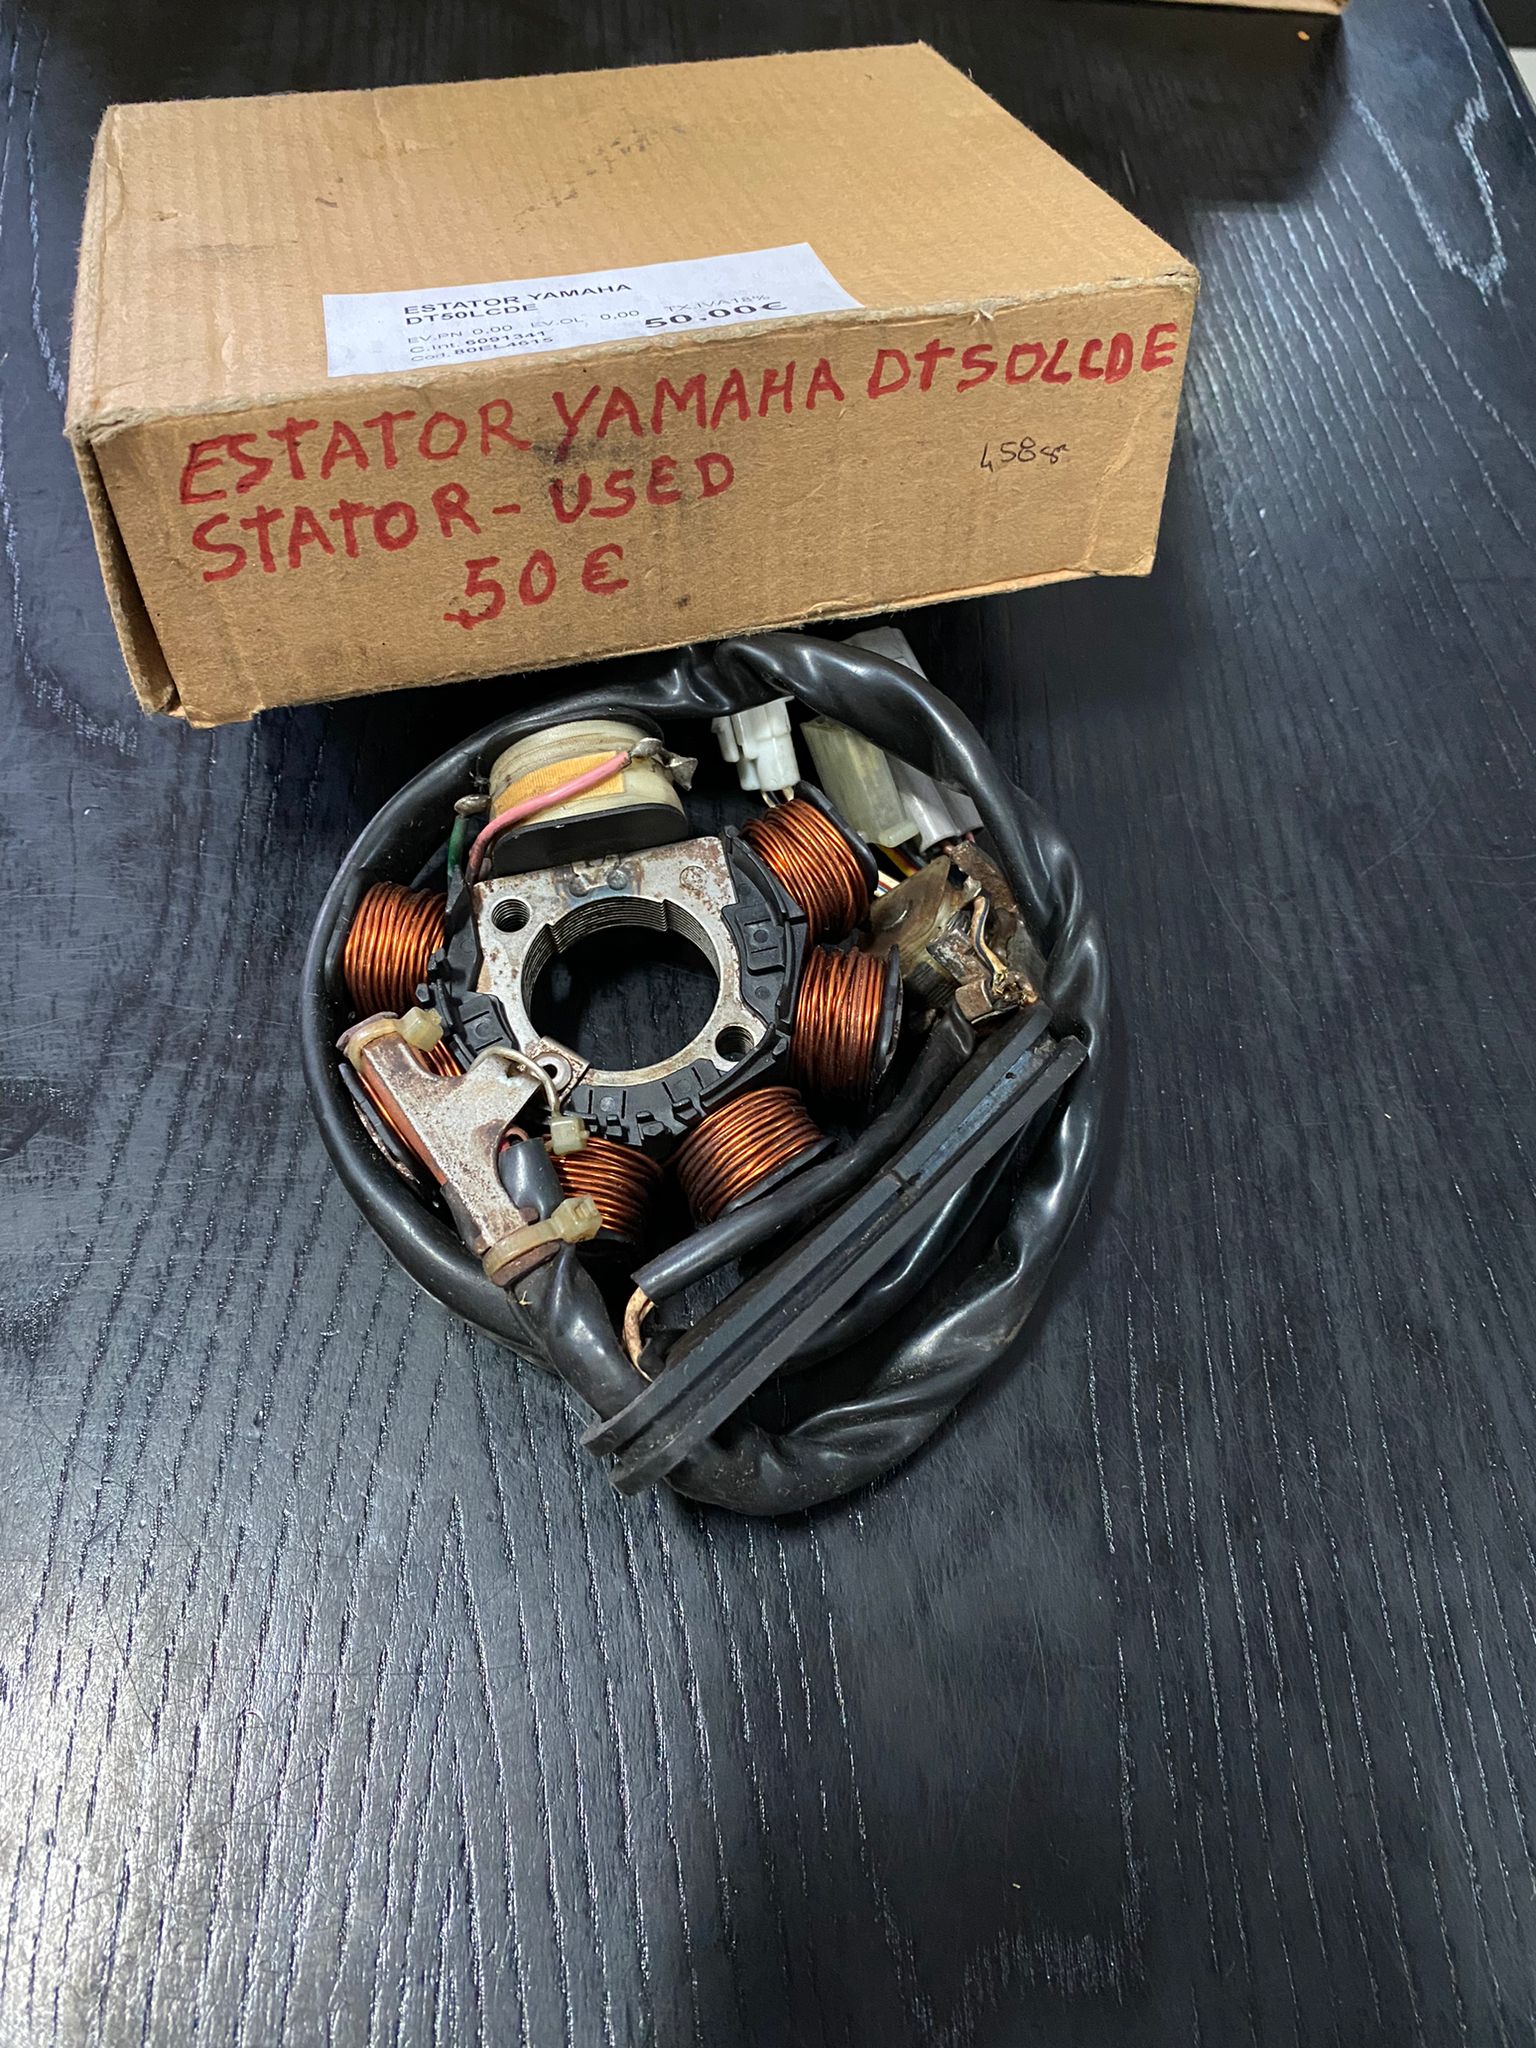 Estator Yamaha DTLCDE 50